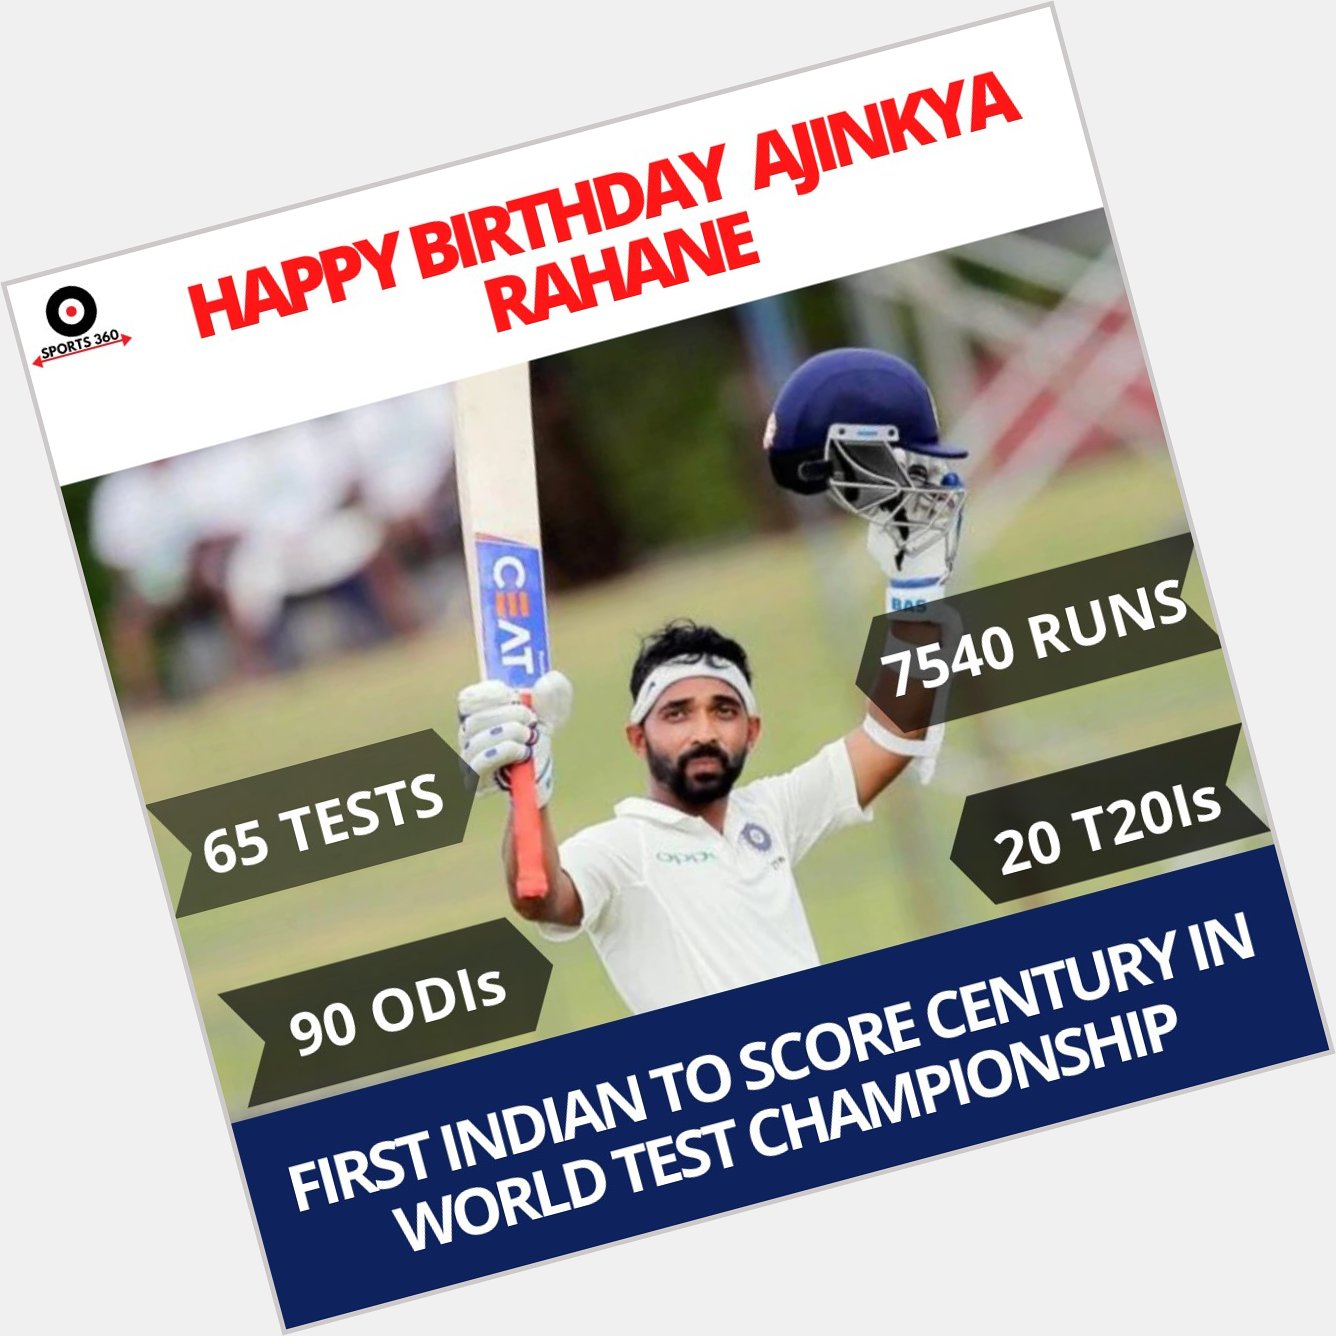 Happy Birthday, Ajinkya Rahane   .
1st Indian to score a century in World Test Championship. 